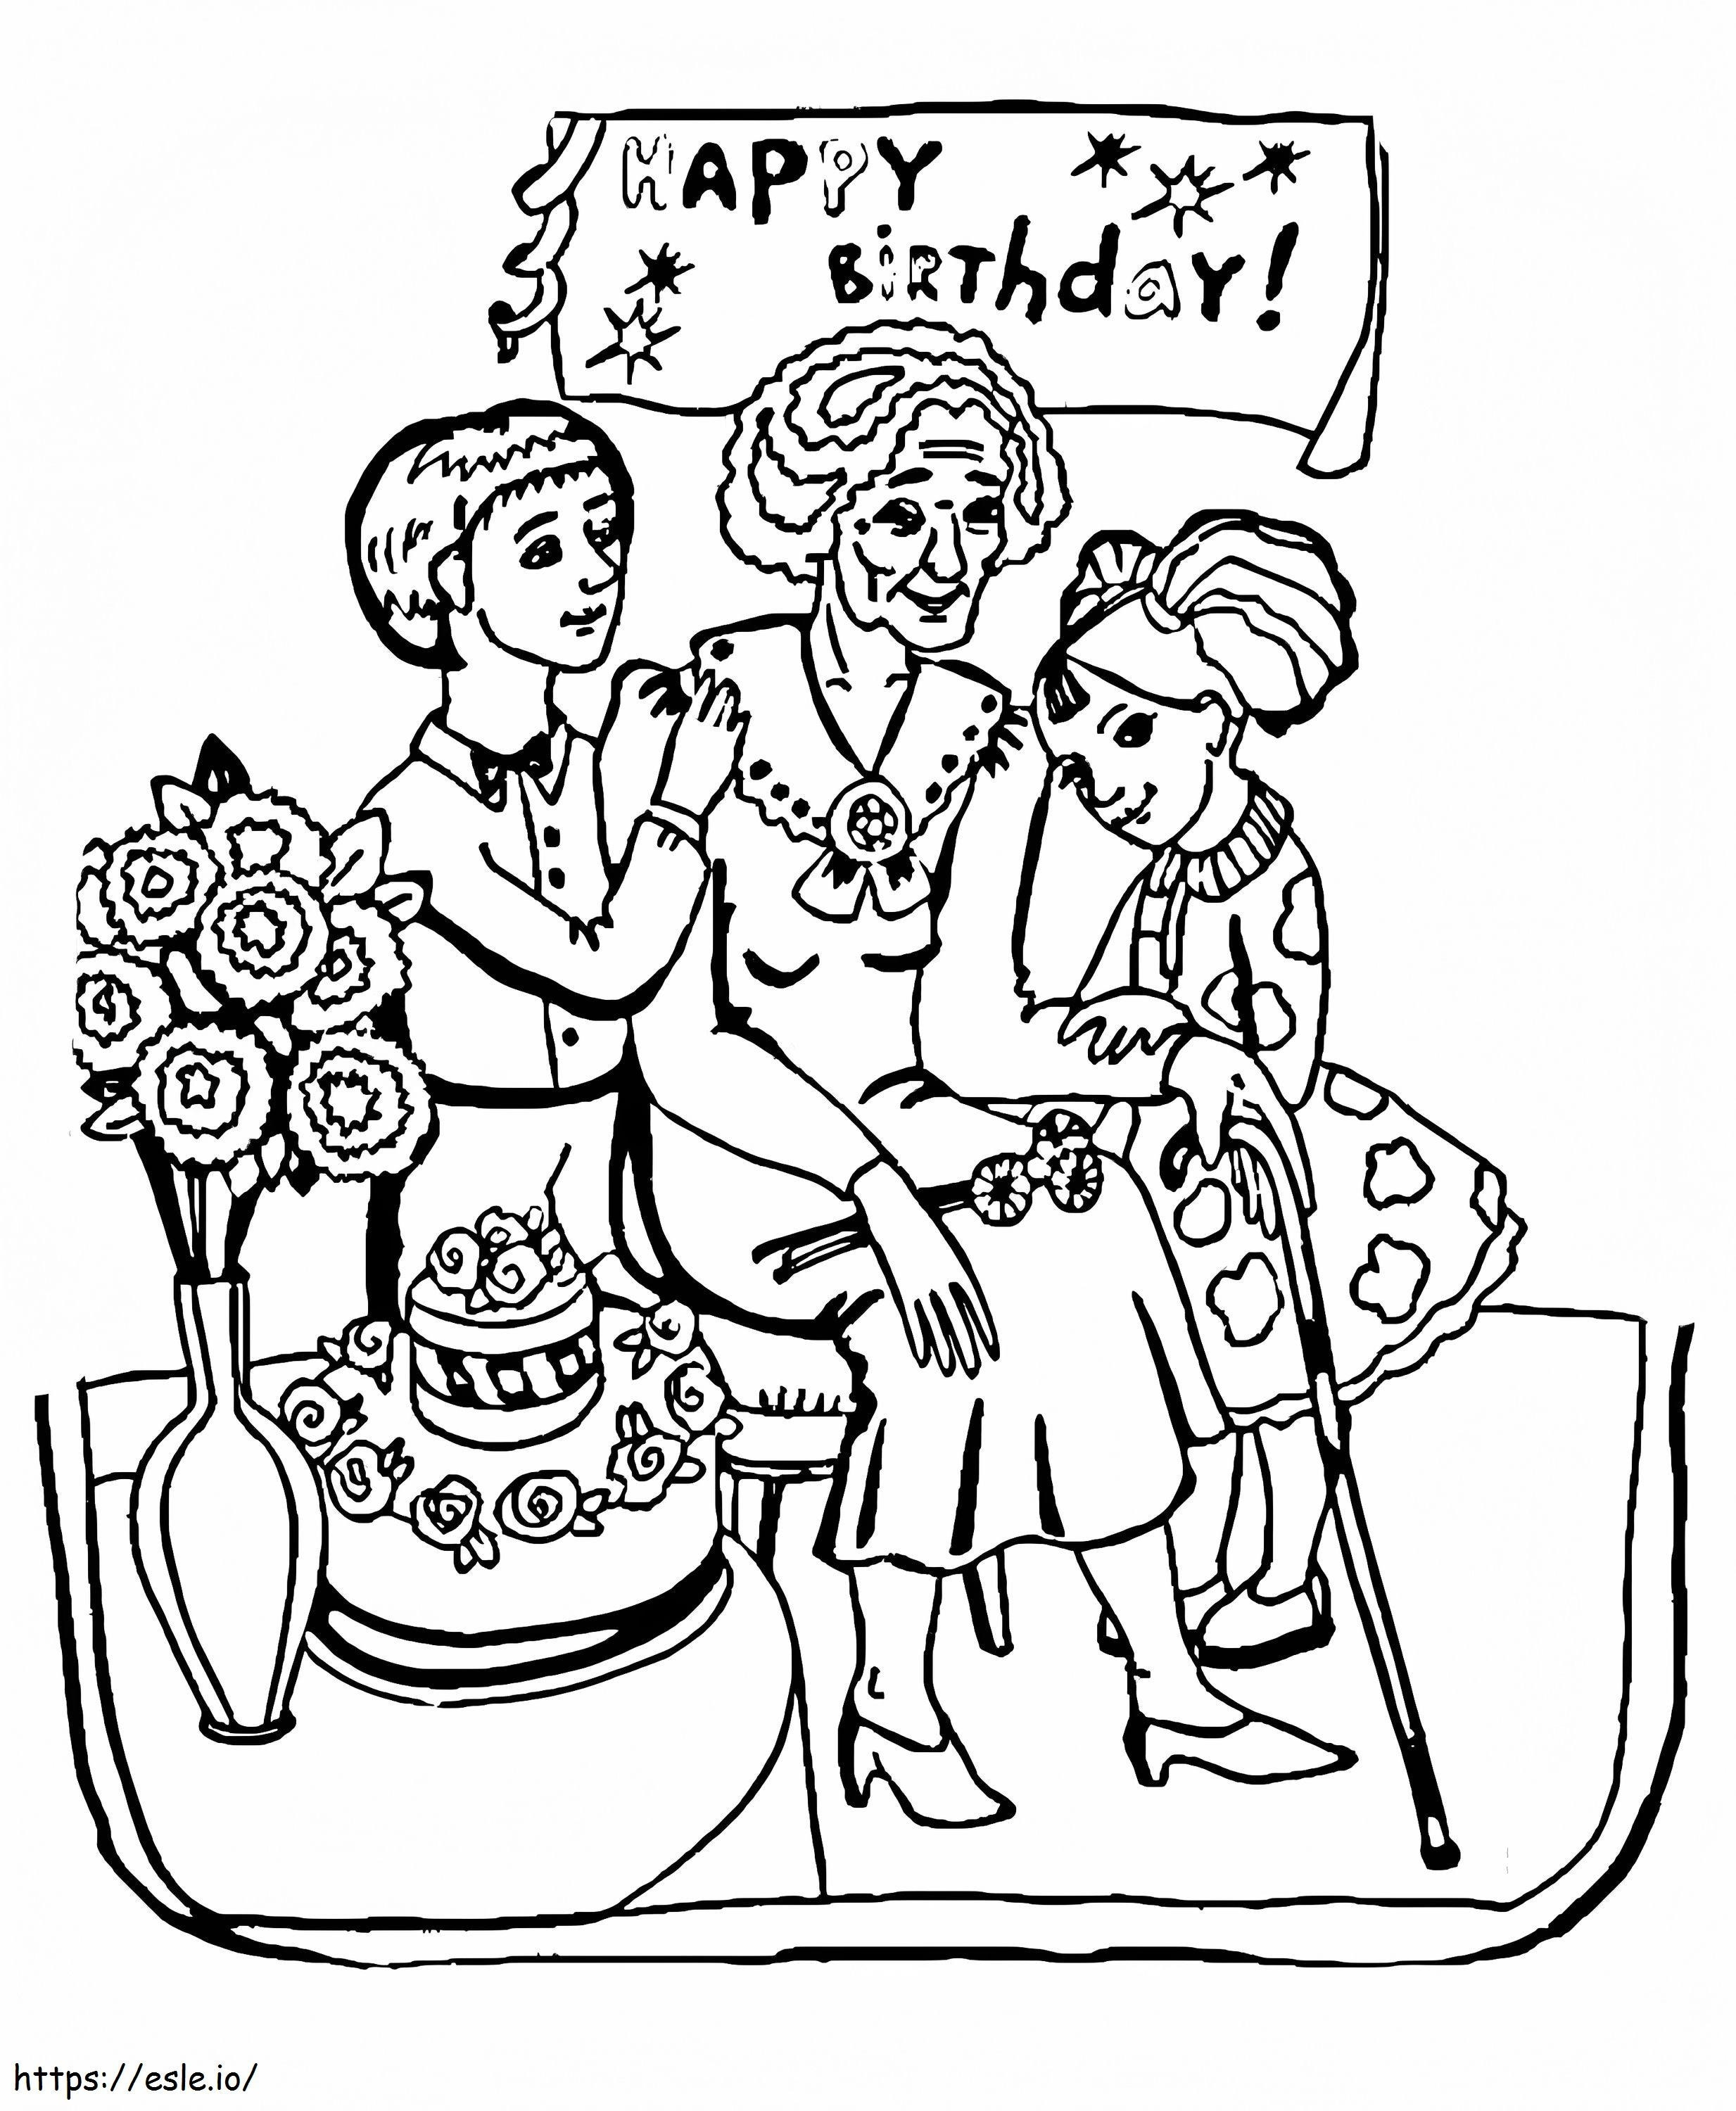 1585966686 Grandma Birthday coloring page